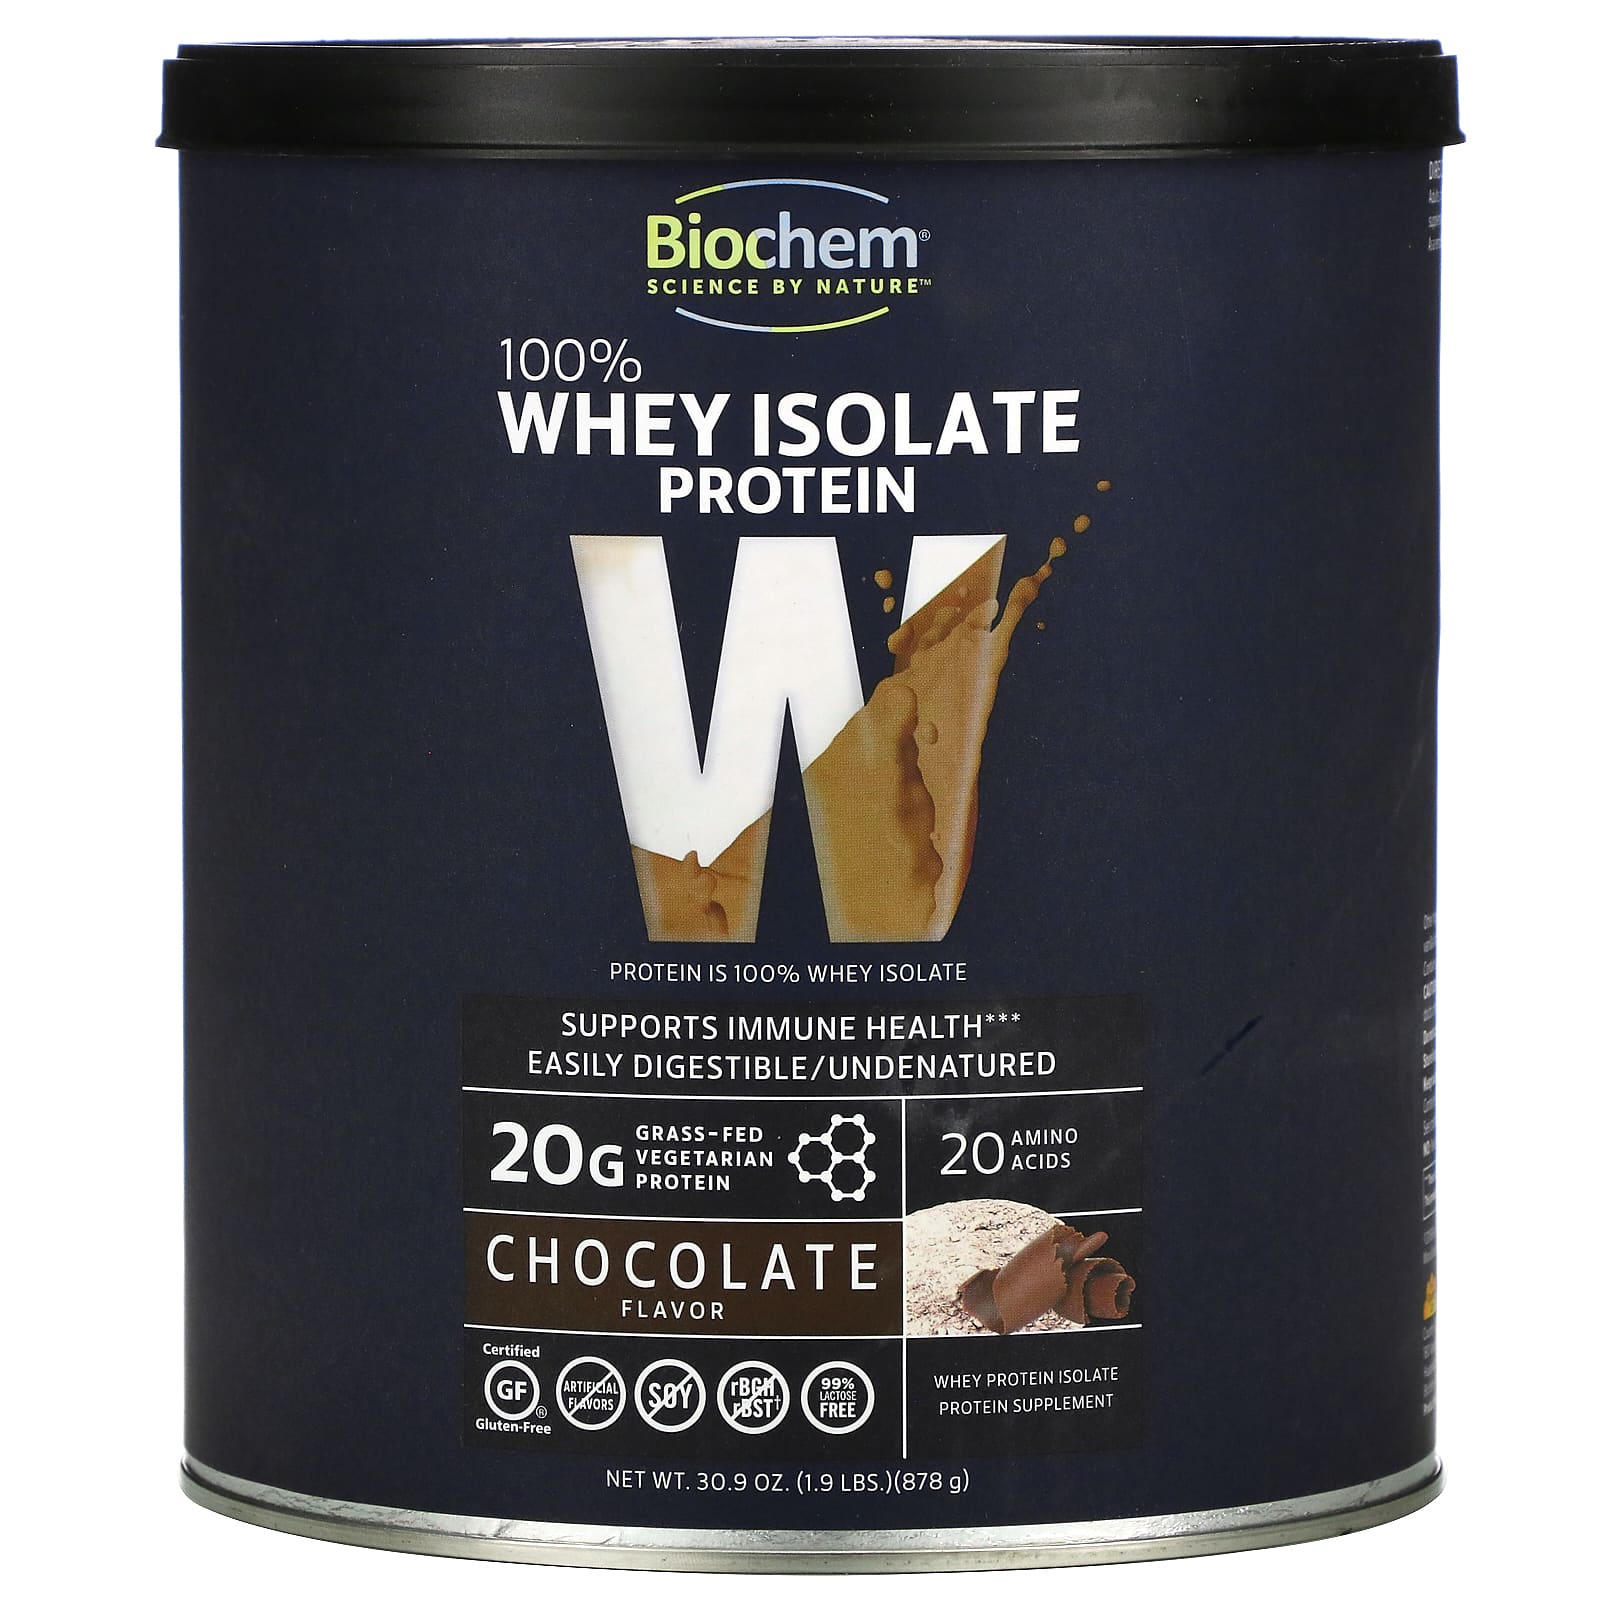 Biochem 100% Whey Isolate Protein Chocolate Flavor 30.9 oz (878 g) biochem 100% whey isolate protein sugar free chocolate flavor 12 5 oz 355 g